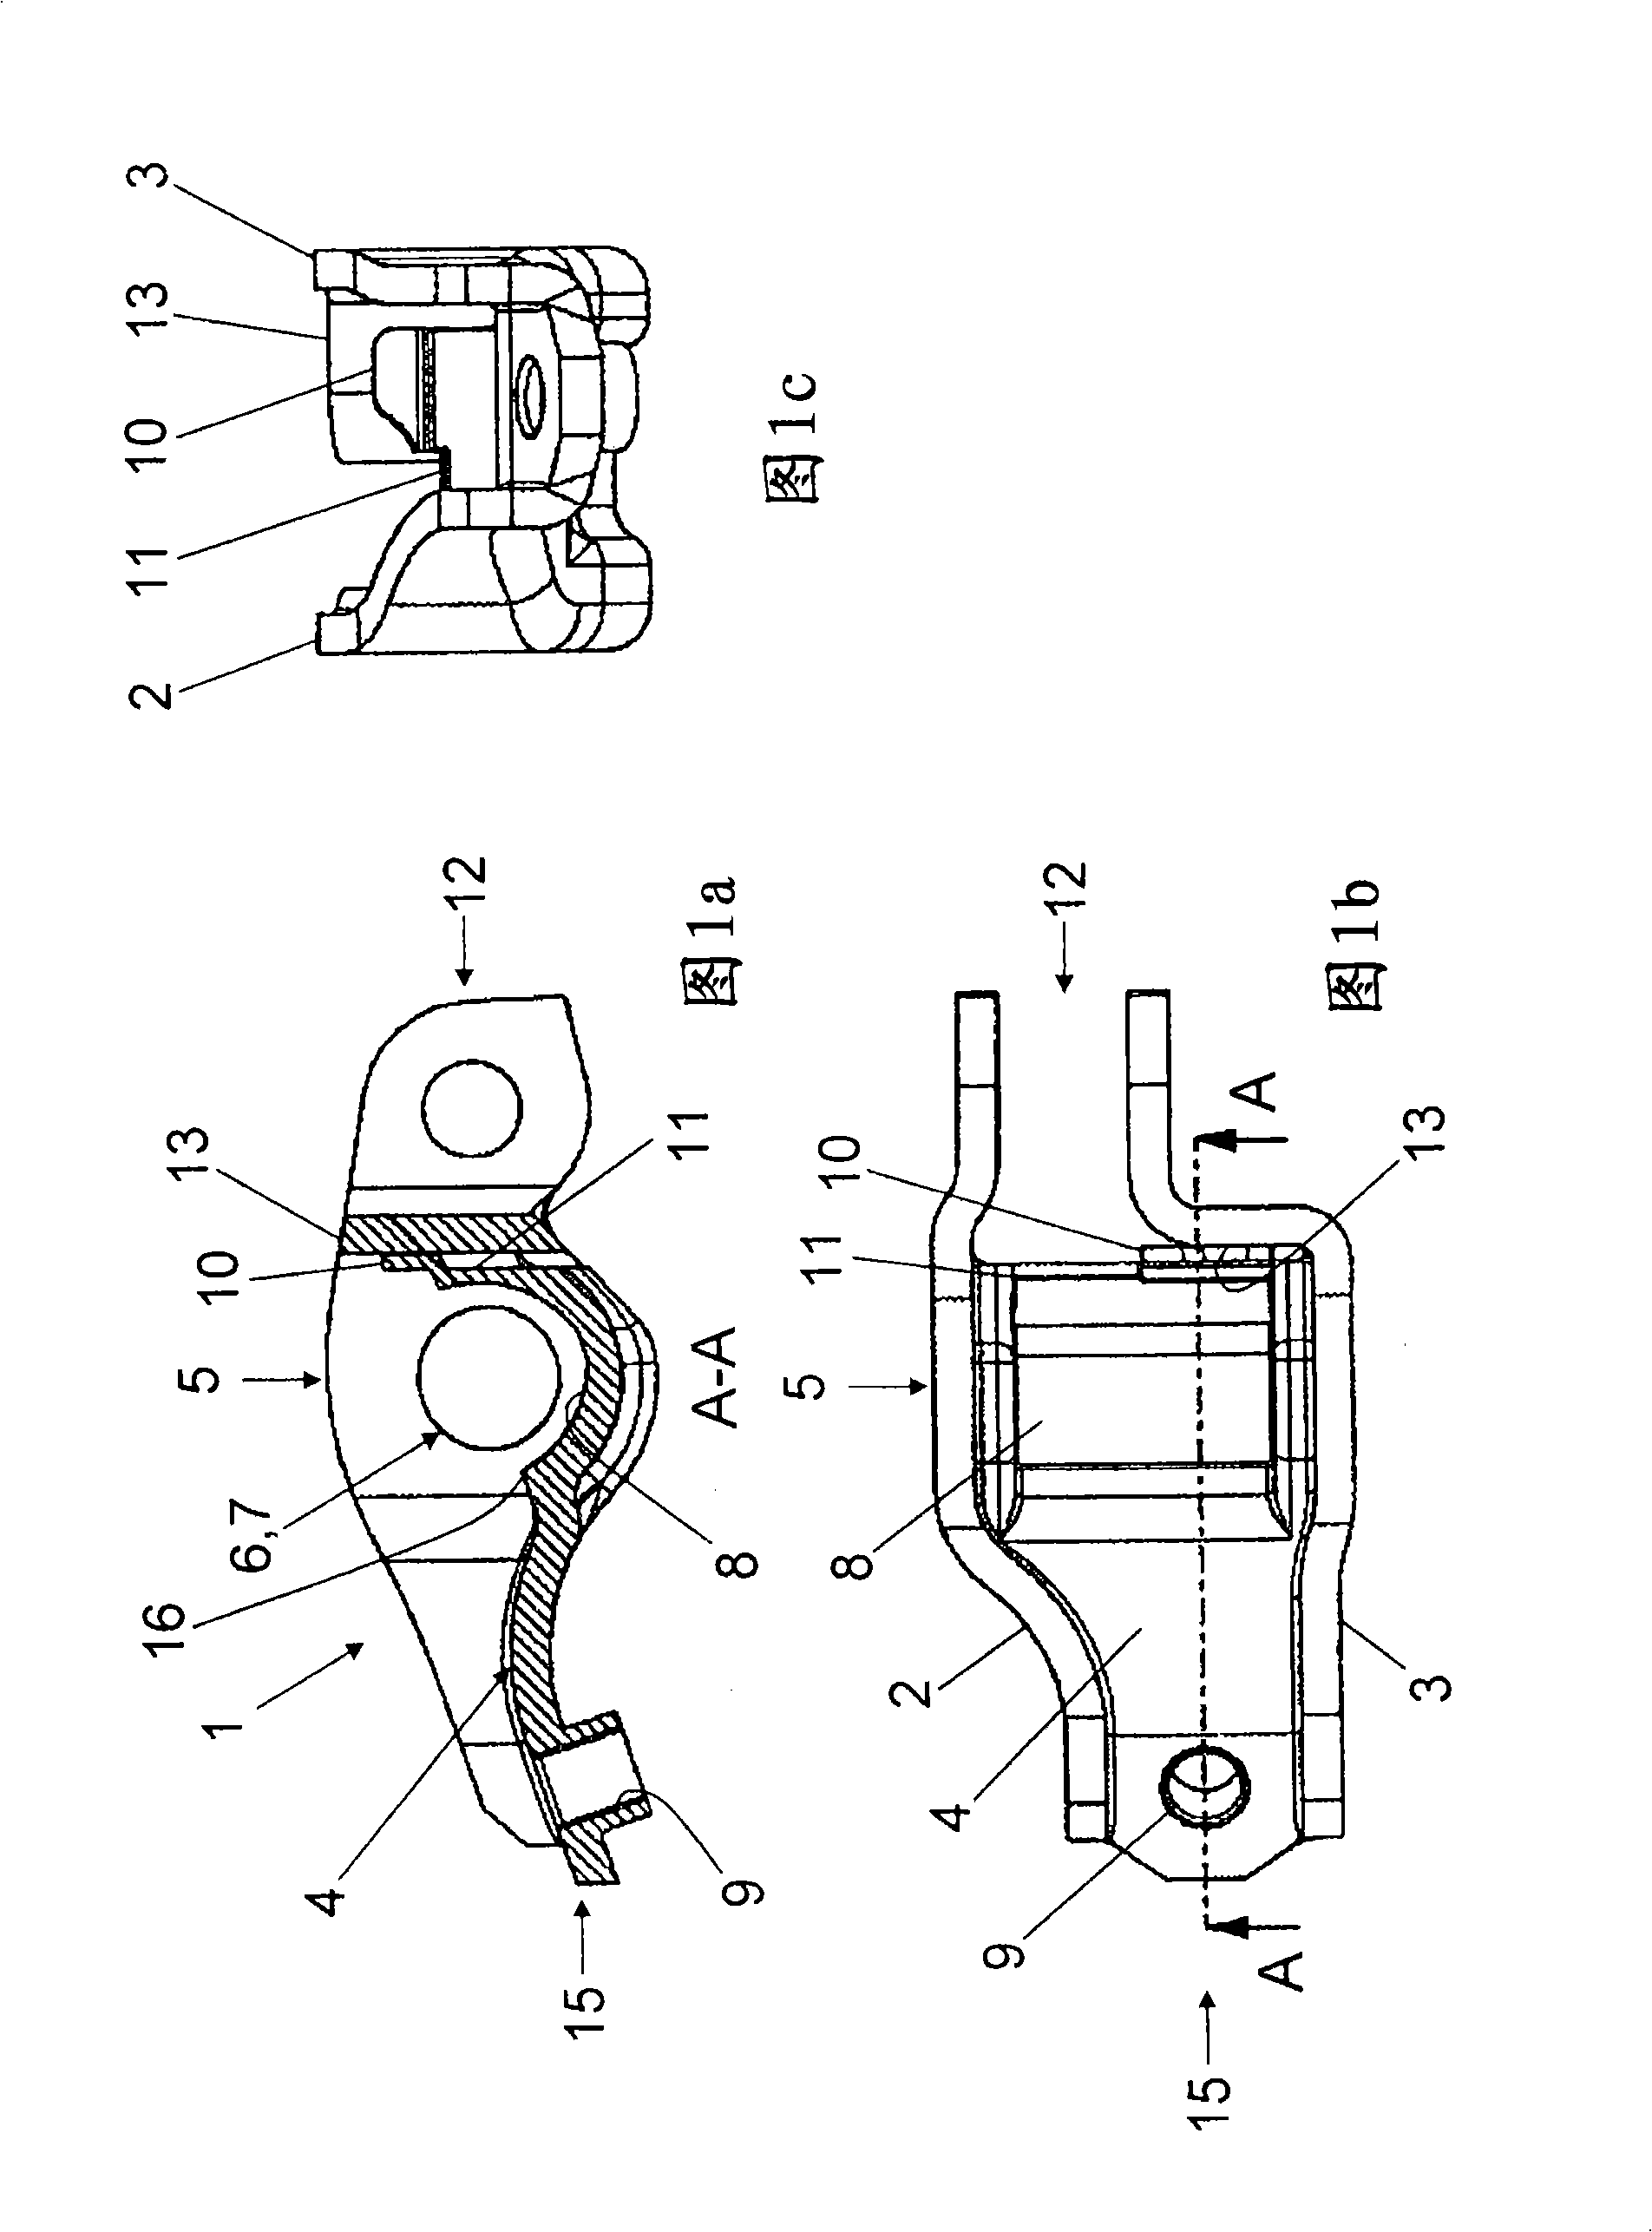 Rocker of internal combustion valve mechanism